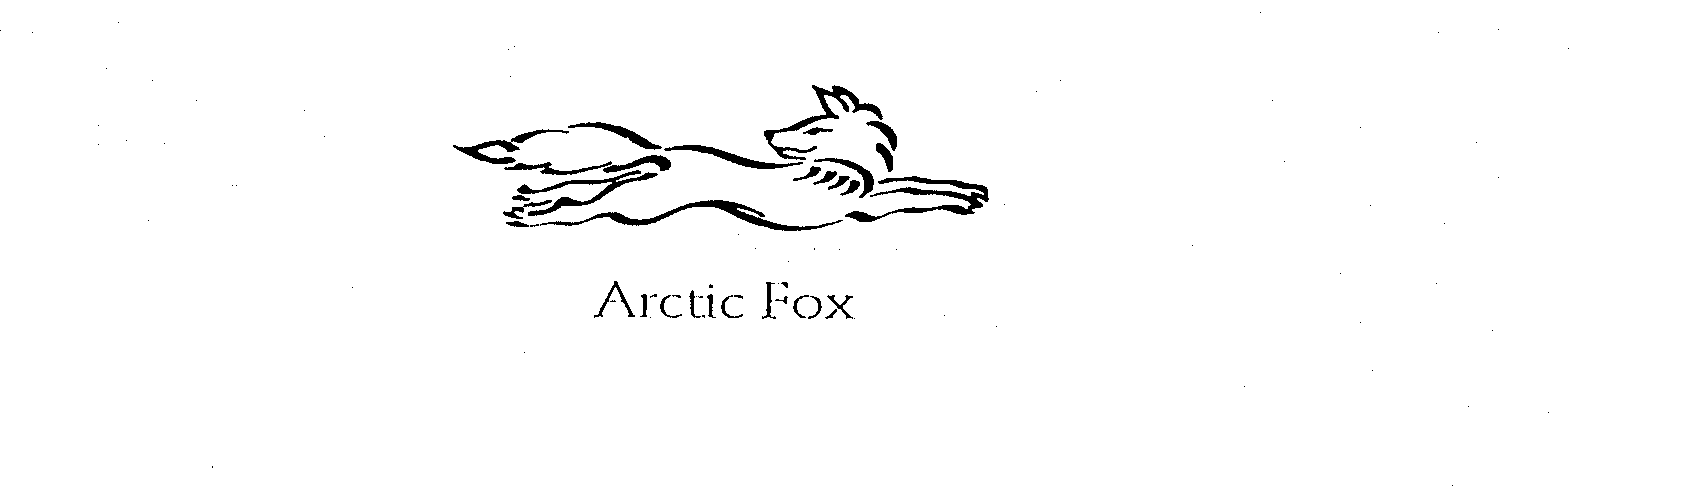 ARCTIC FOX